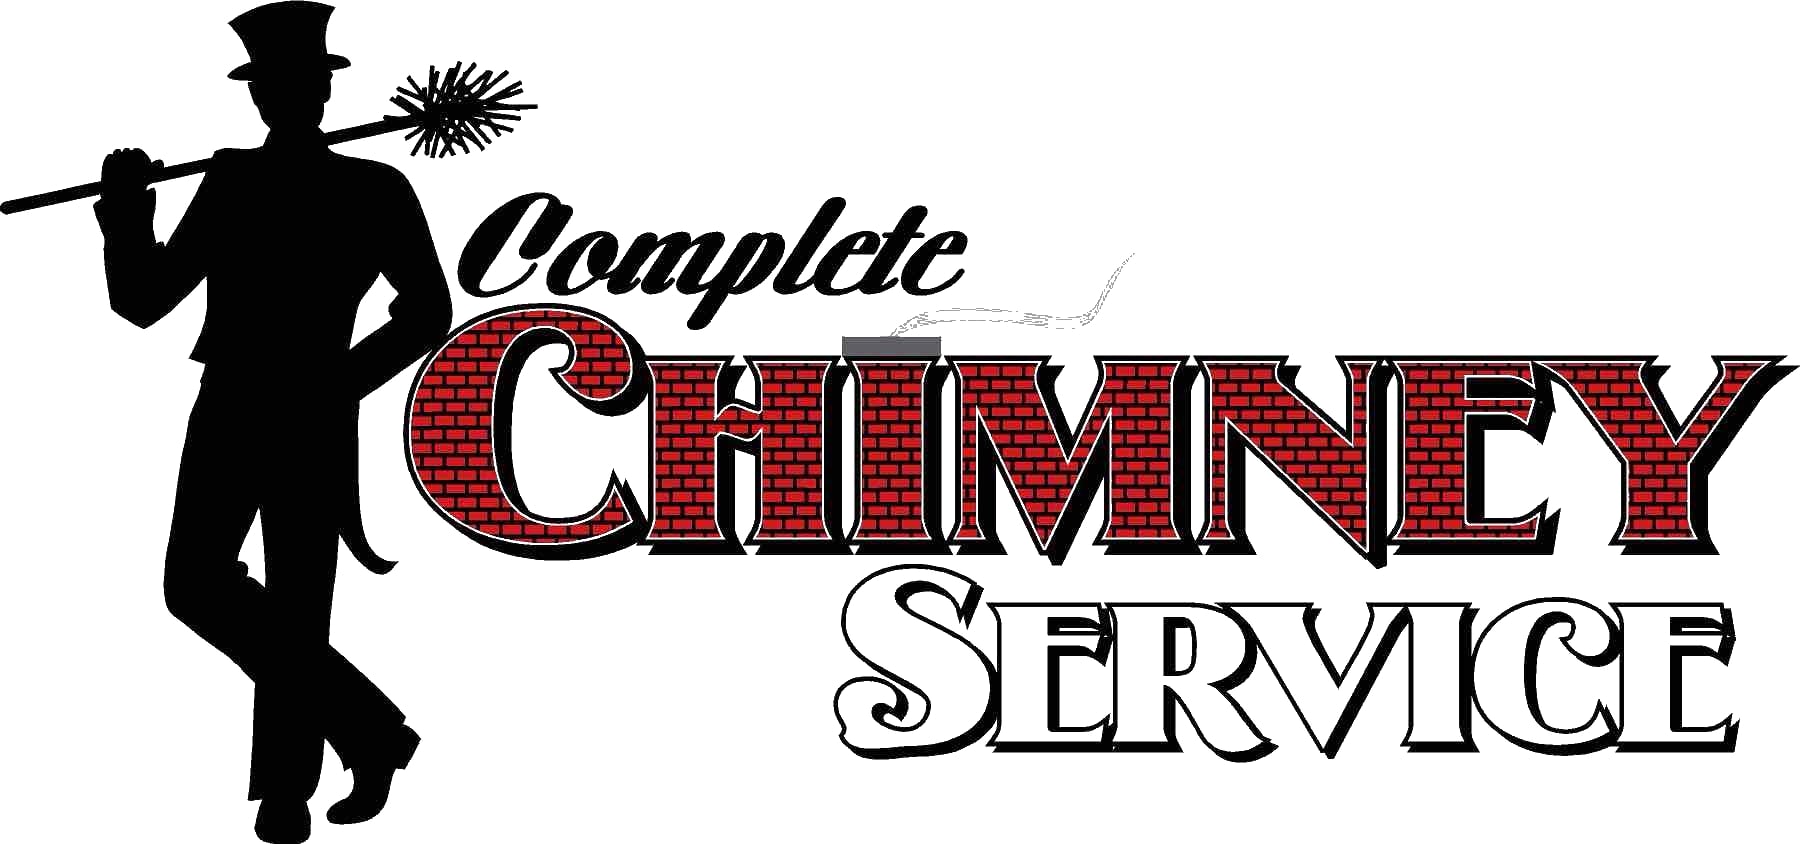 Company logo of Complete Chimney Service